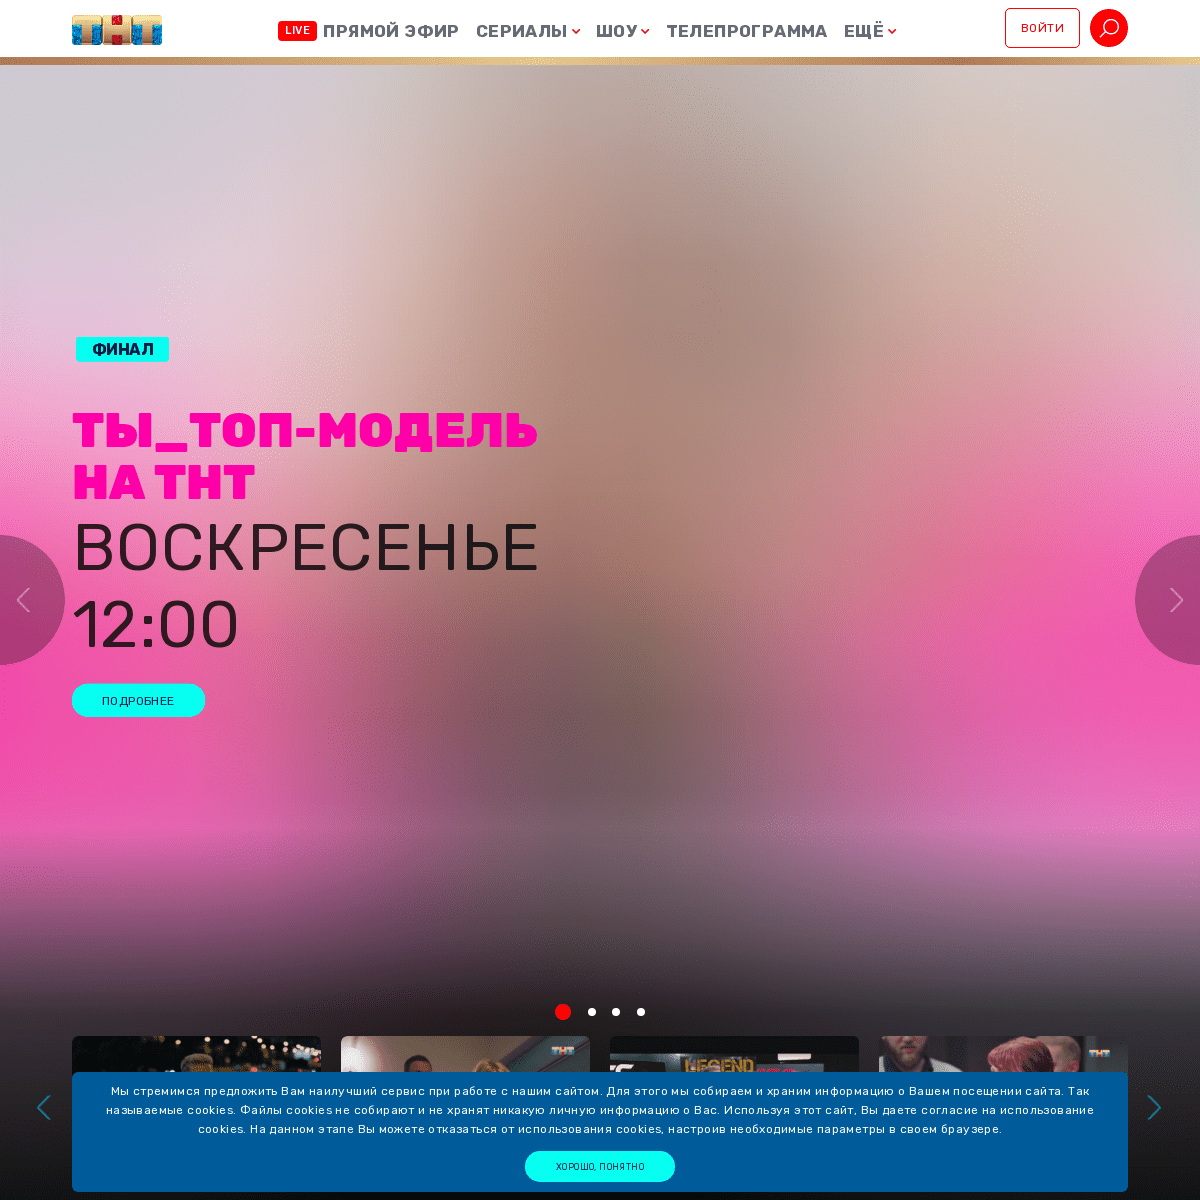 A complete backup of https://tnt-online.ru